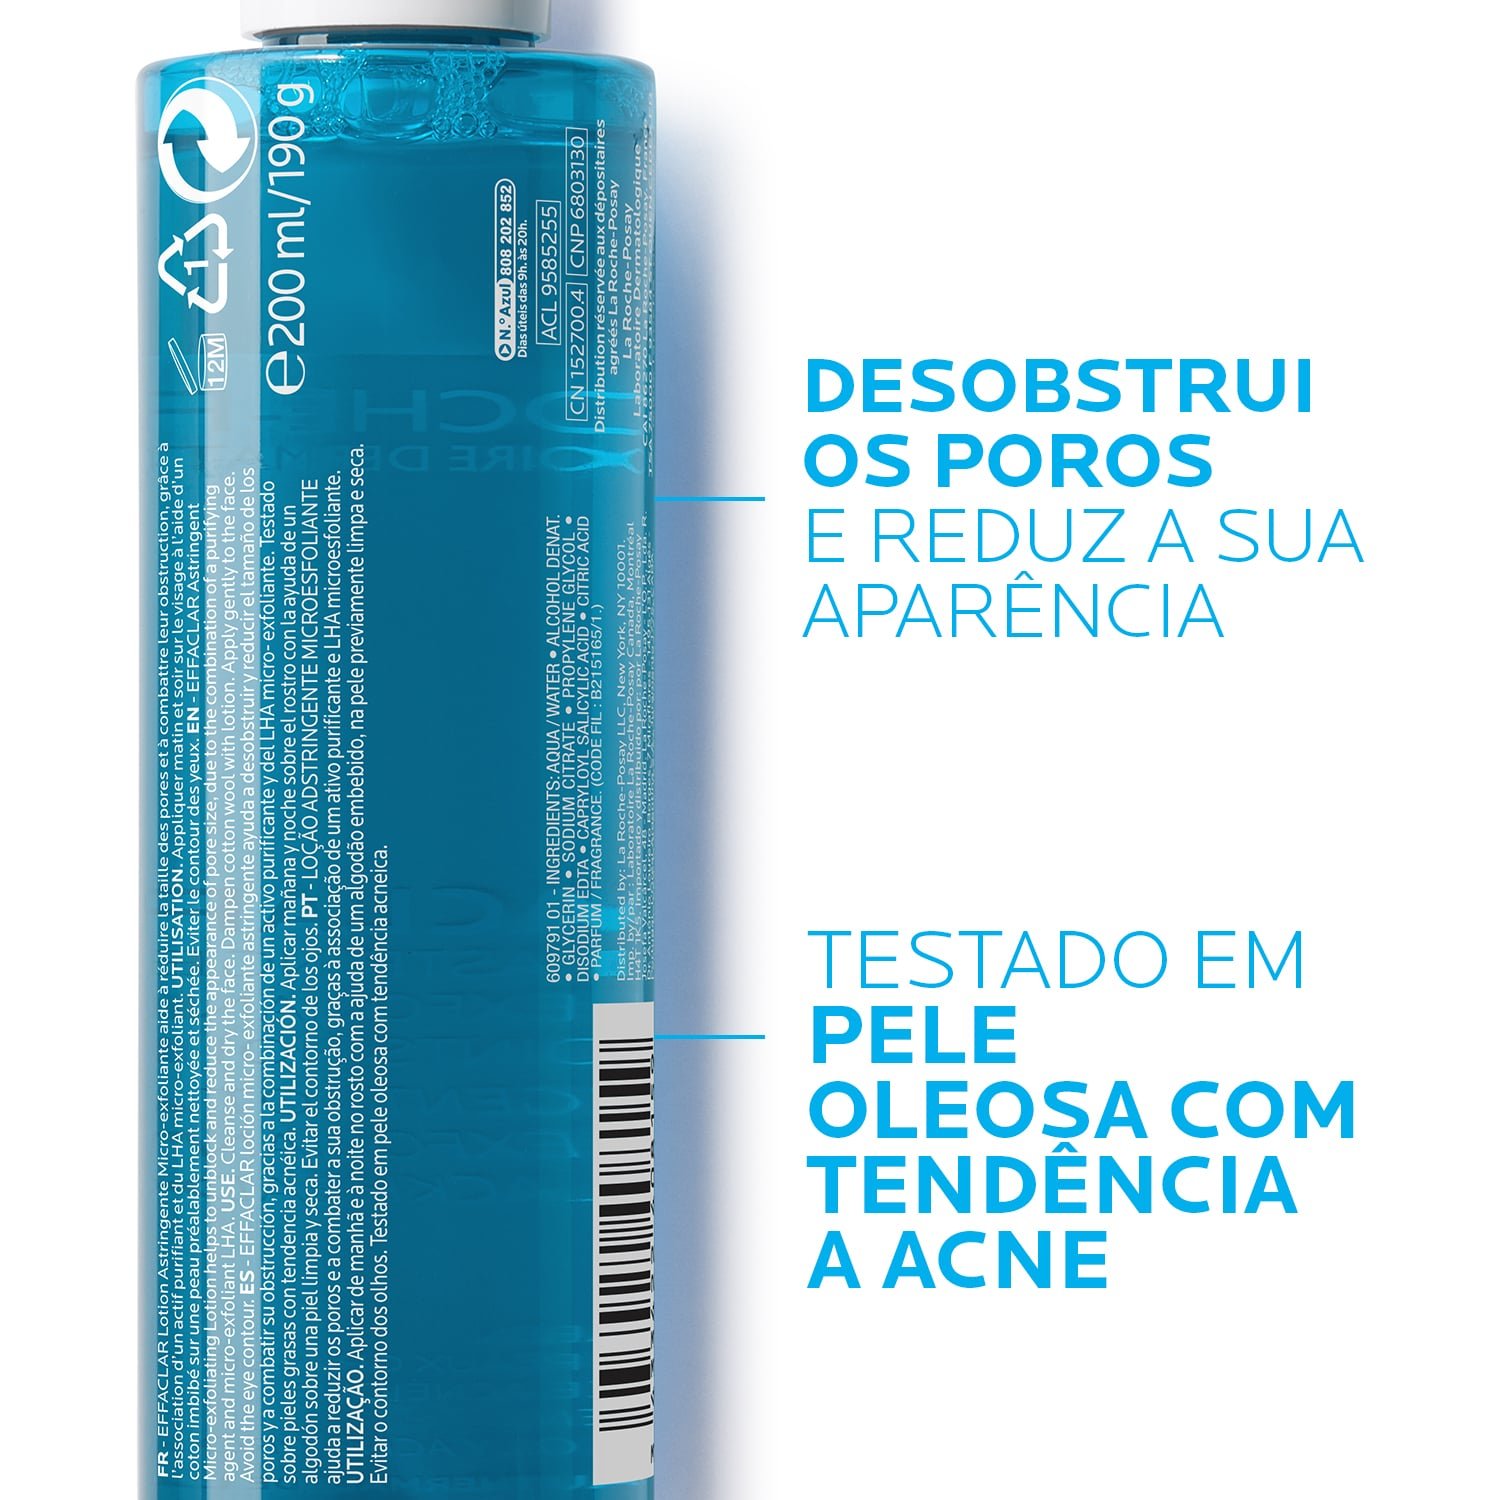 La Roche Posay ProductPage Acne Effaclar Micro Exfoliating Astringent 